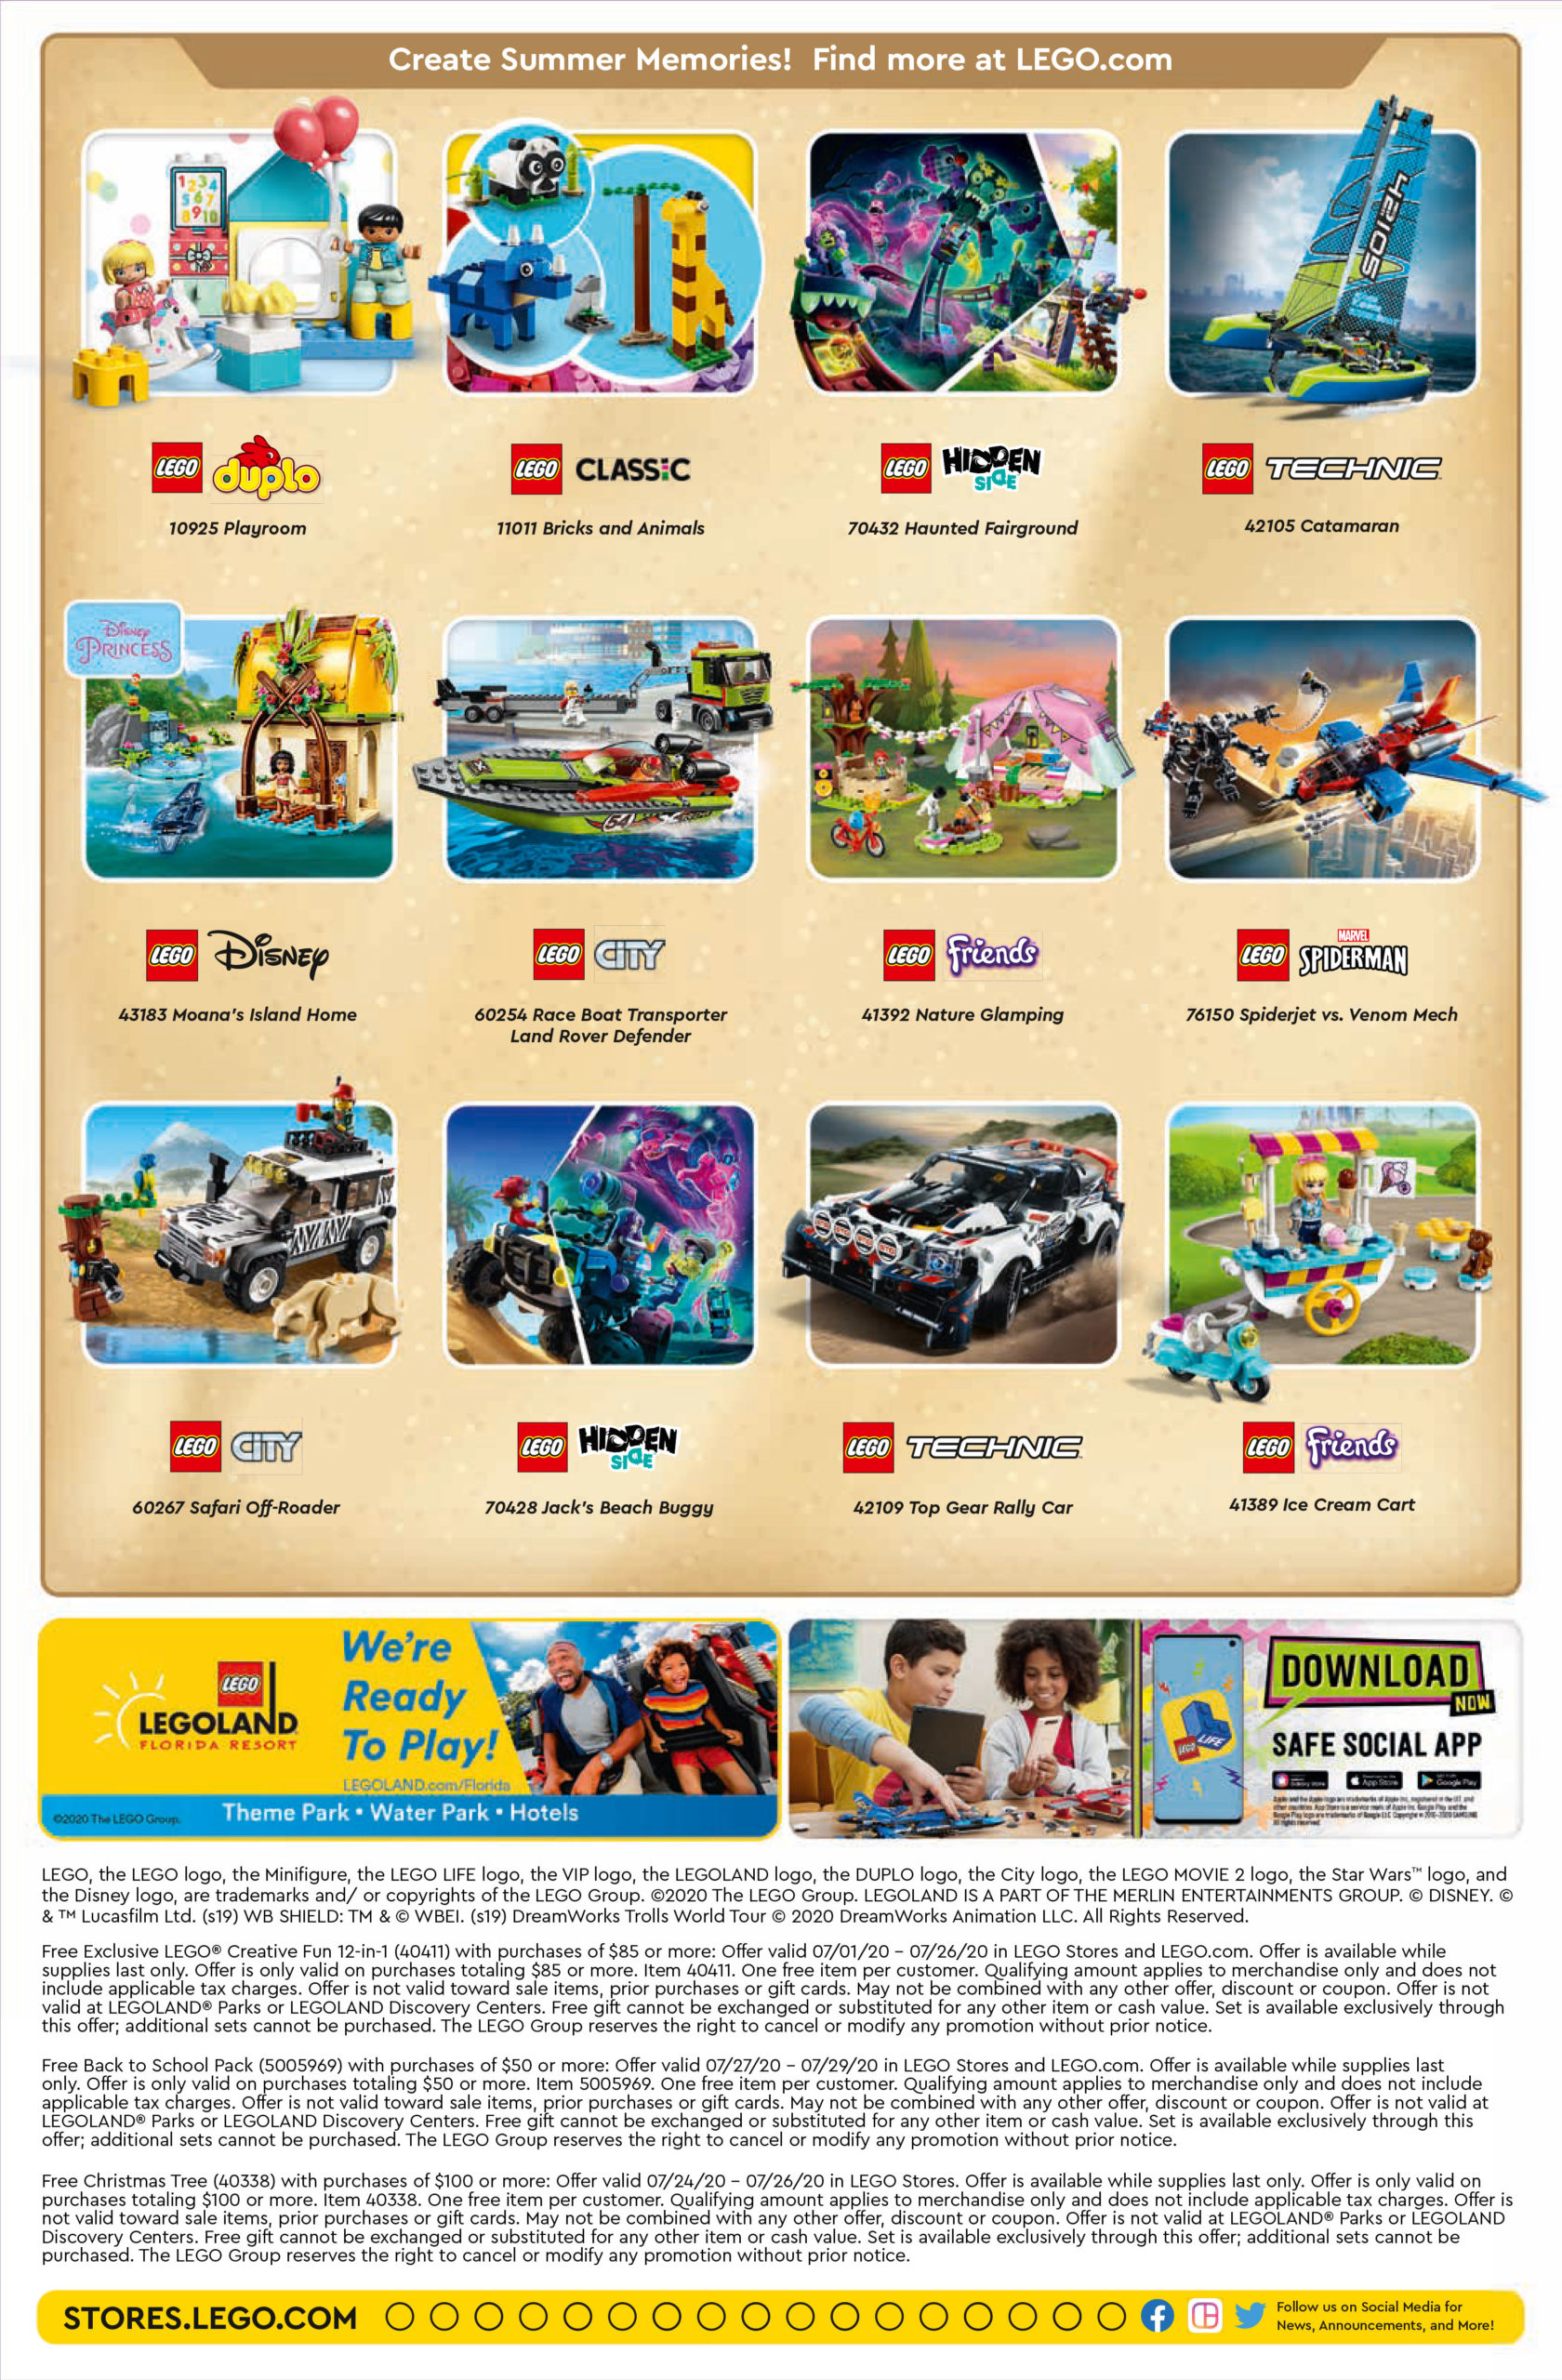 LEGO Brand Store Calendar July 2020 